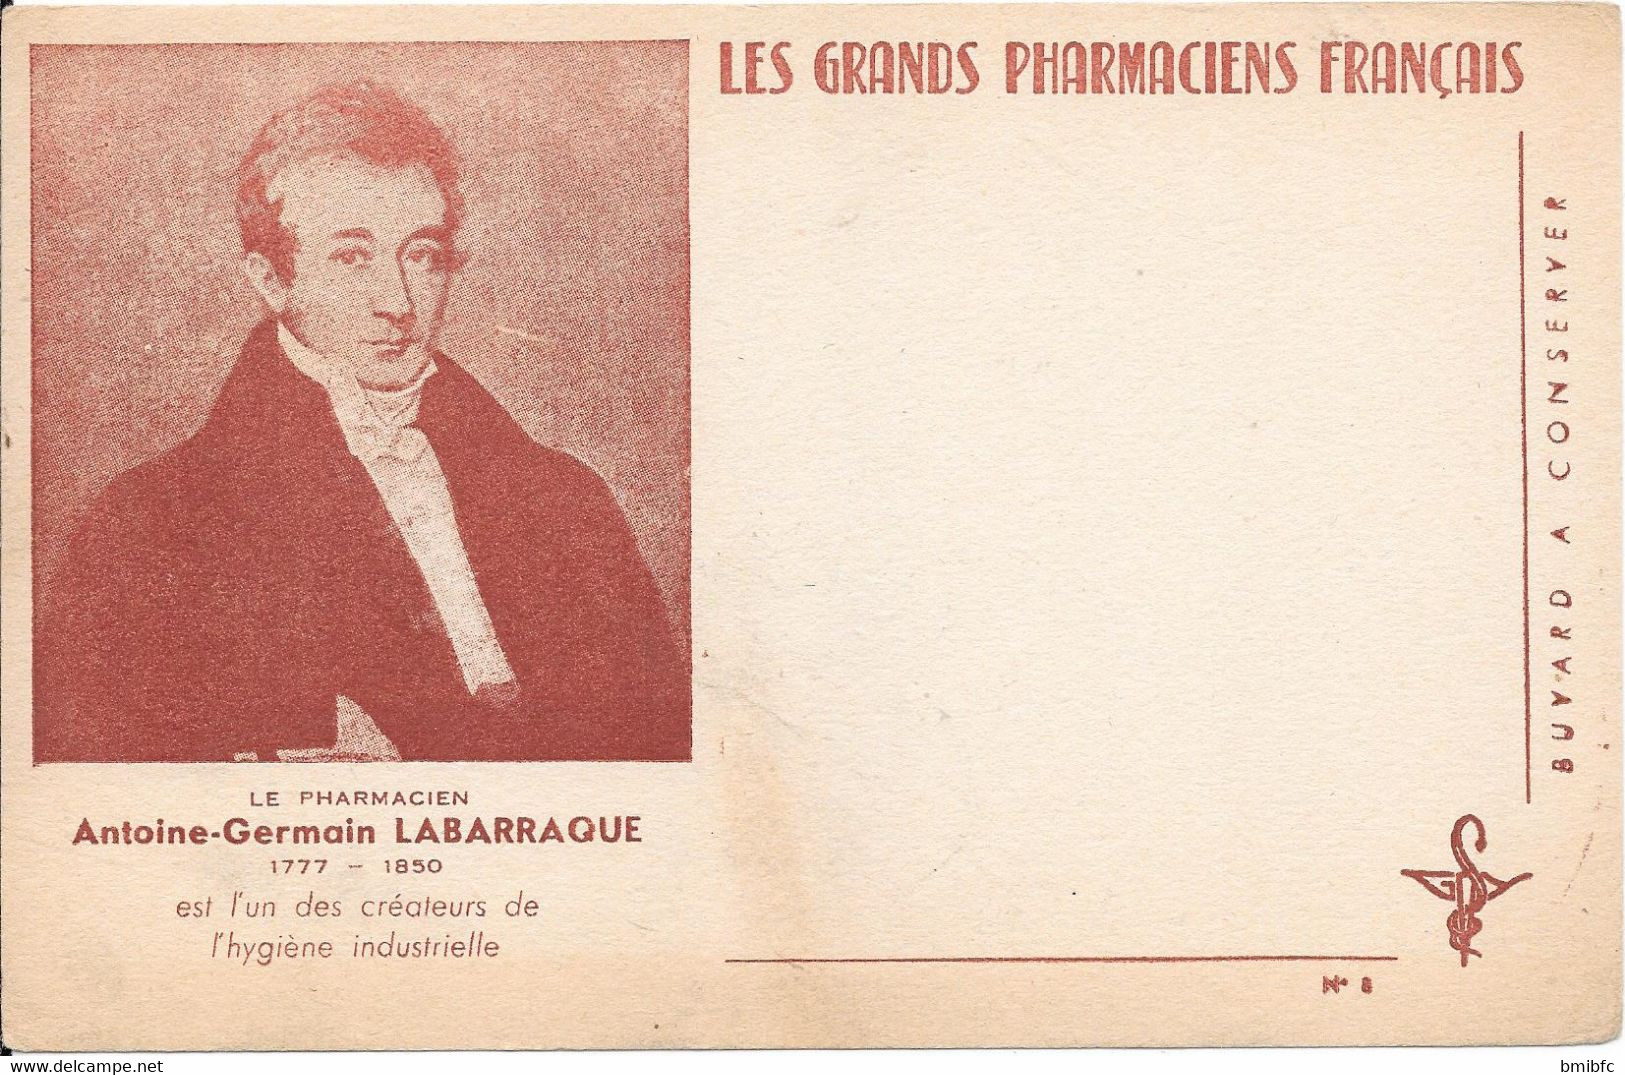 LES GRANDS PHARMACIENS FRANÇAIS - Antoine-Germain LABARRAQUE 1777-1850 - P